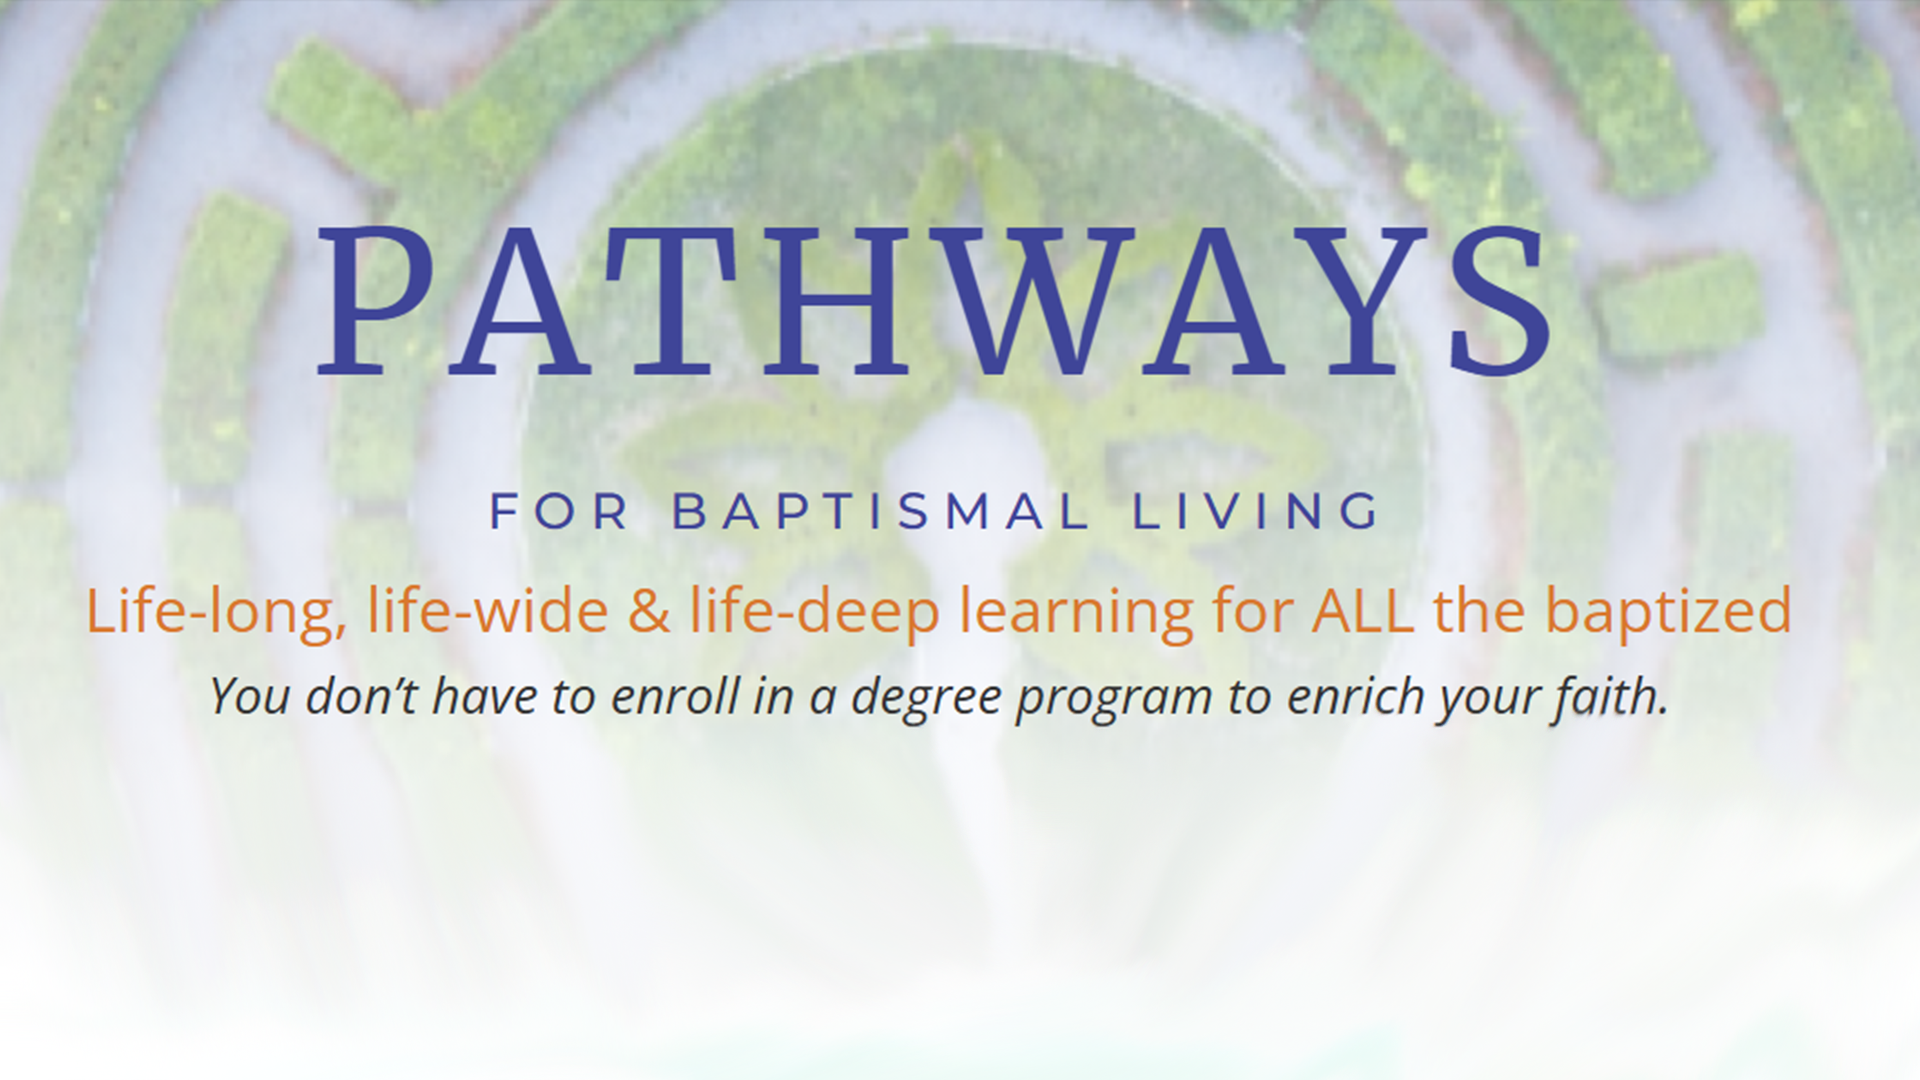 Pathways for Baptismal Living